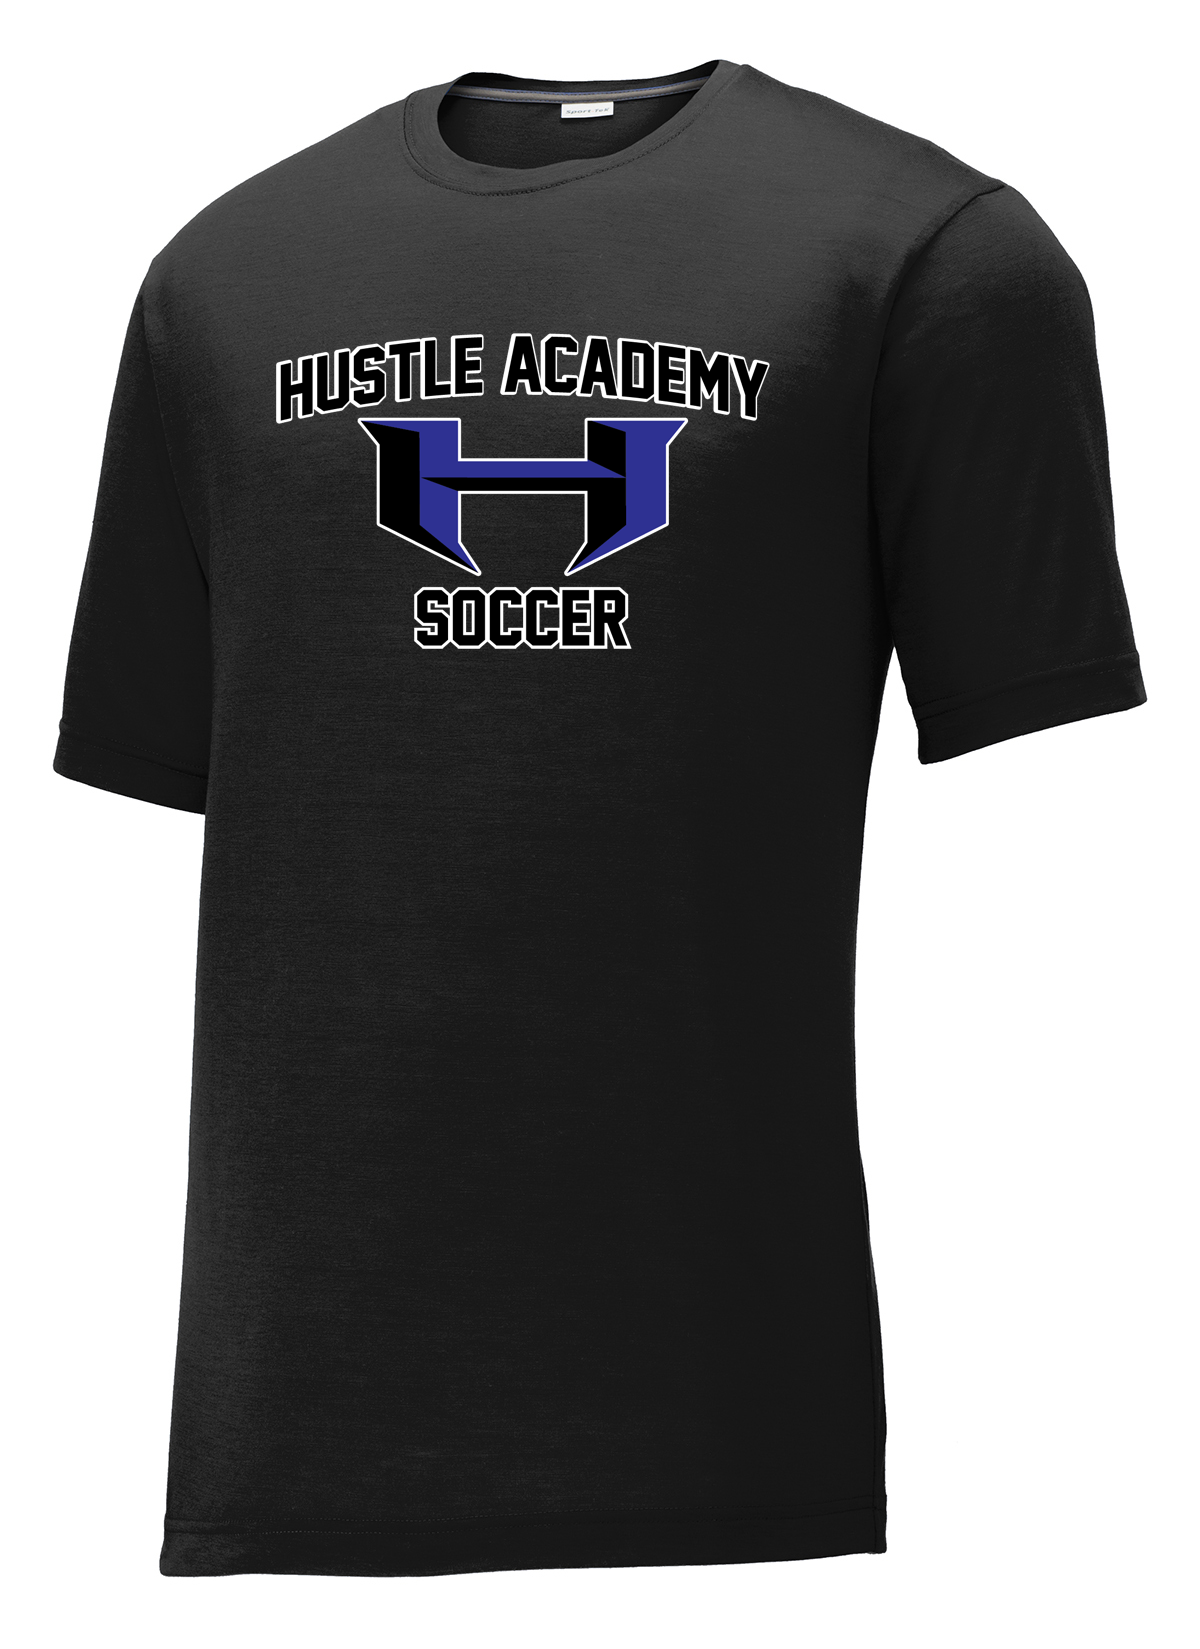 Hustle Academy Soccer CottonTouch Performance T-Shirt